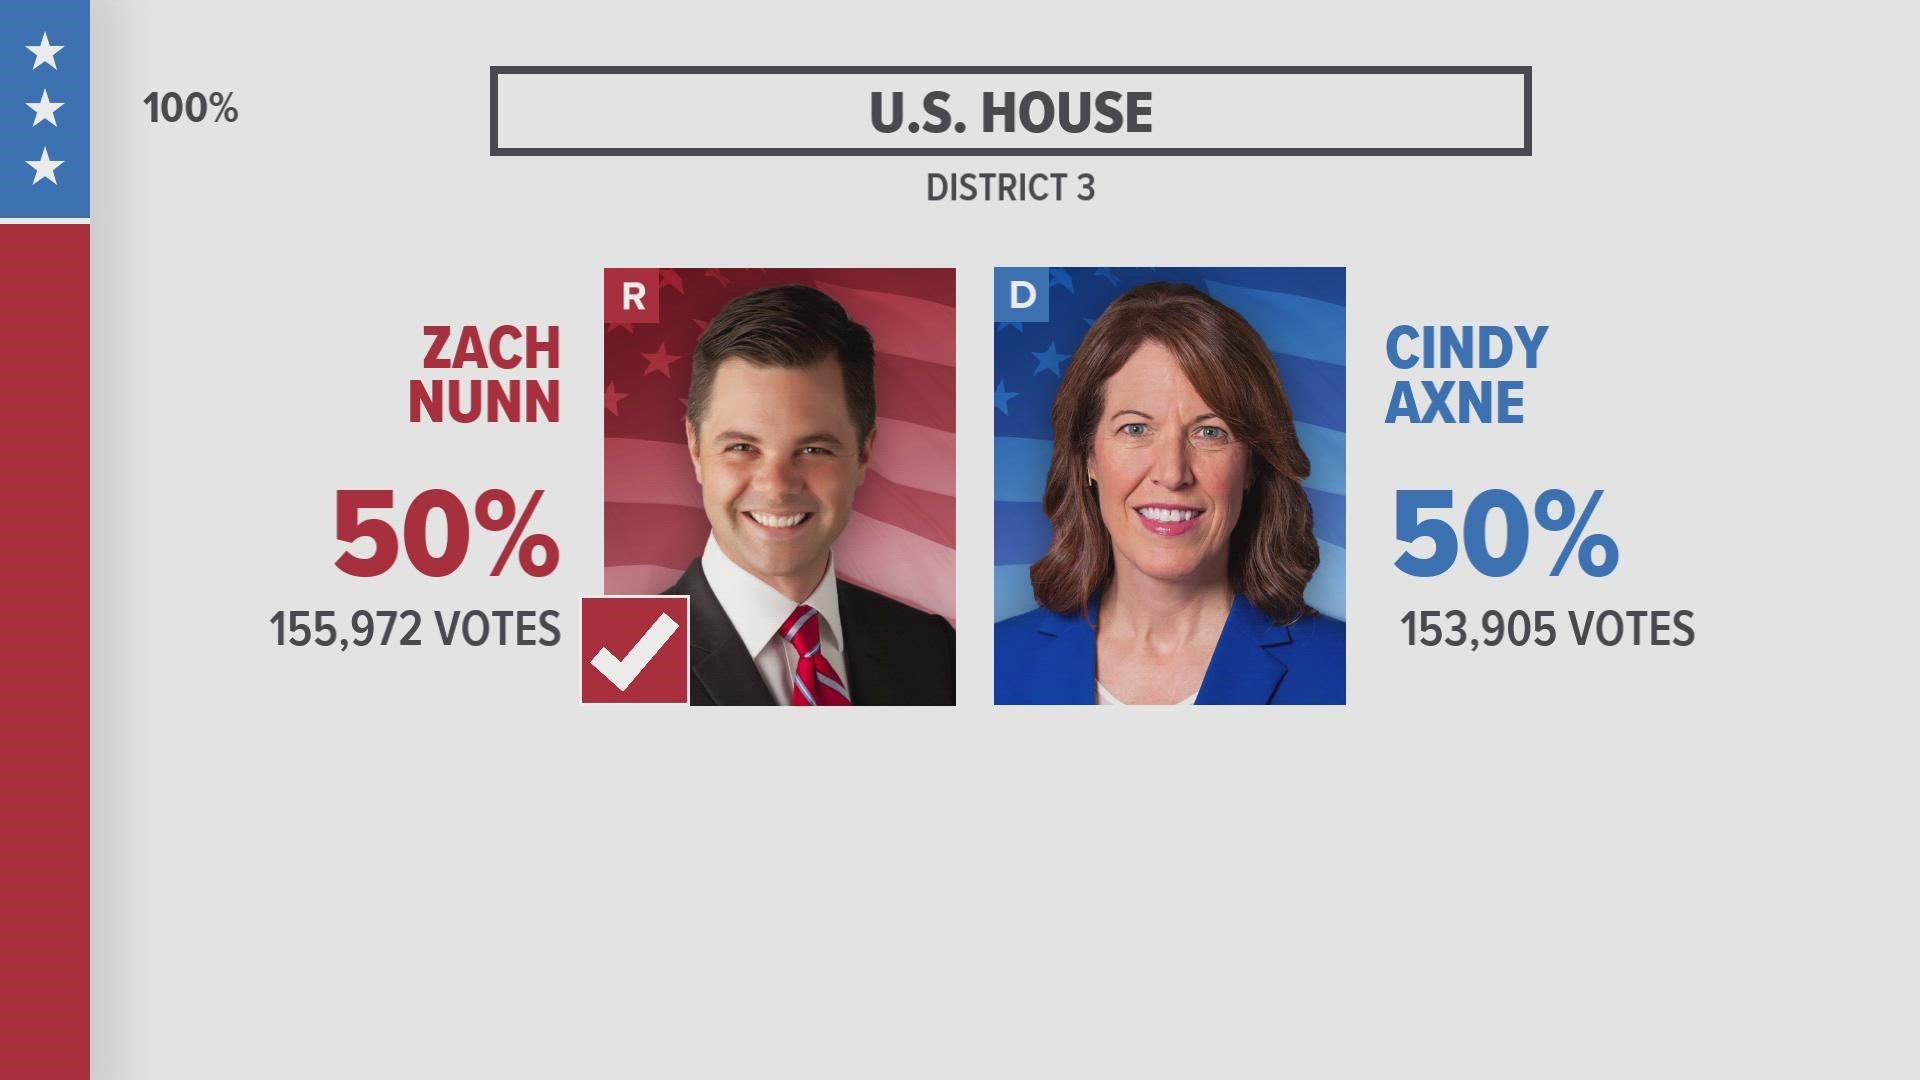 Zach Nunn won with 155,972 votes, while incumbent Cindy Axne won 153,905, according to AP data.